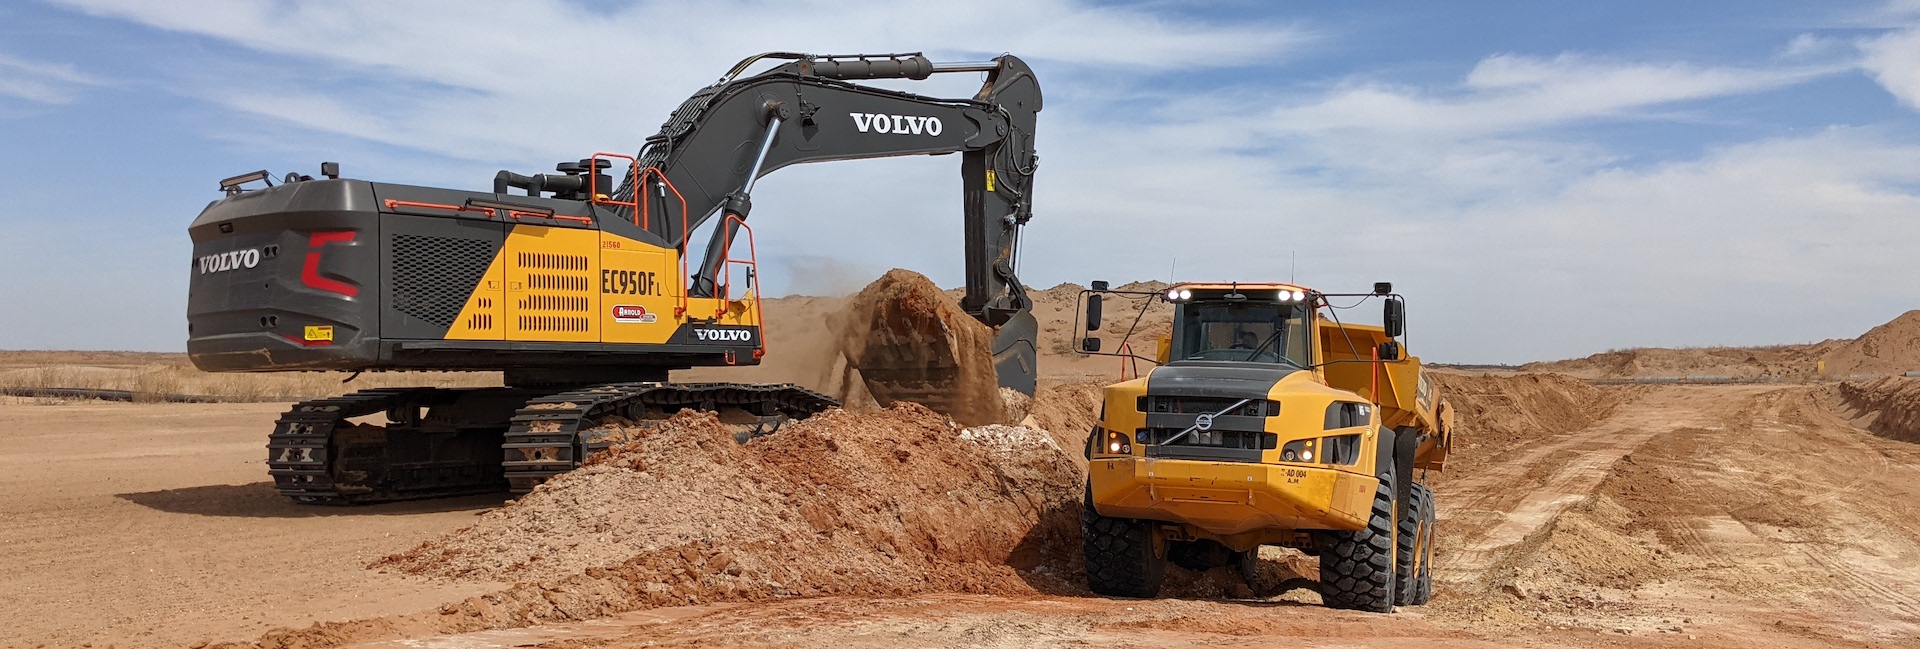 Main Volvo Hydraulic Cylinders on Wheel Loaders, Excavators, and Mining Trucks